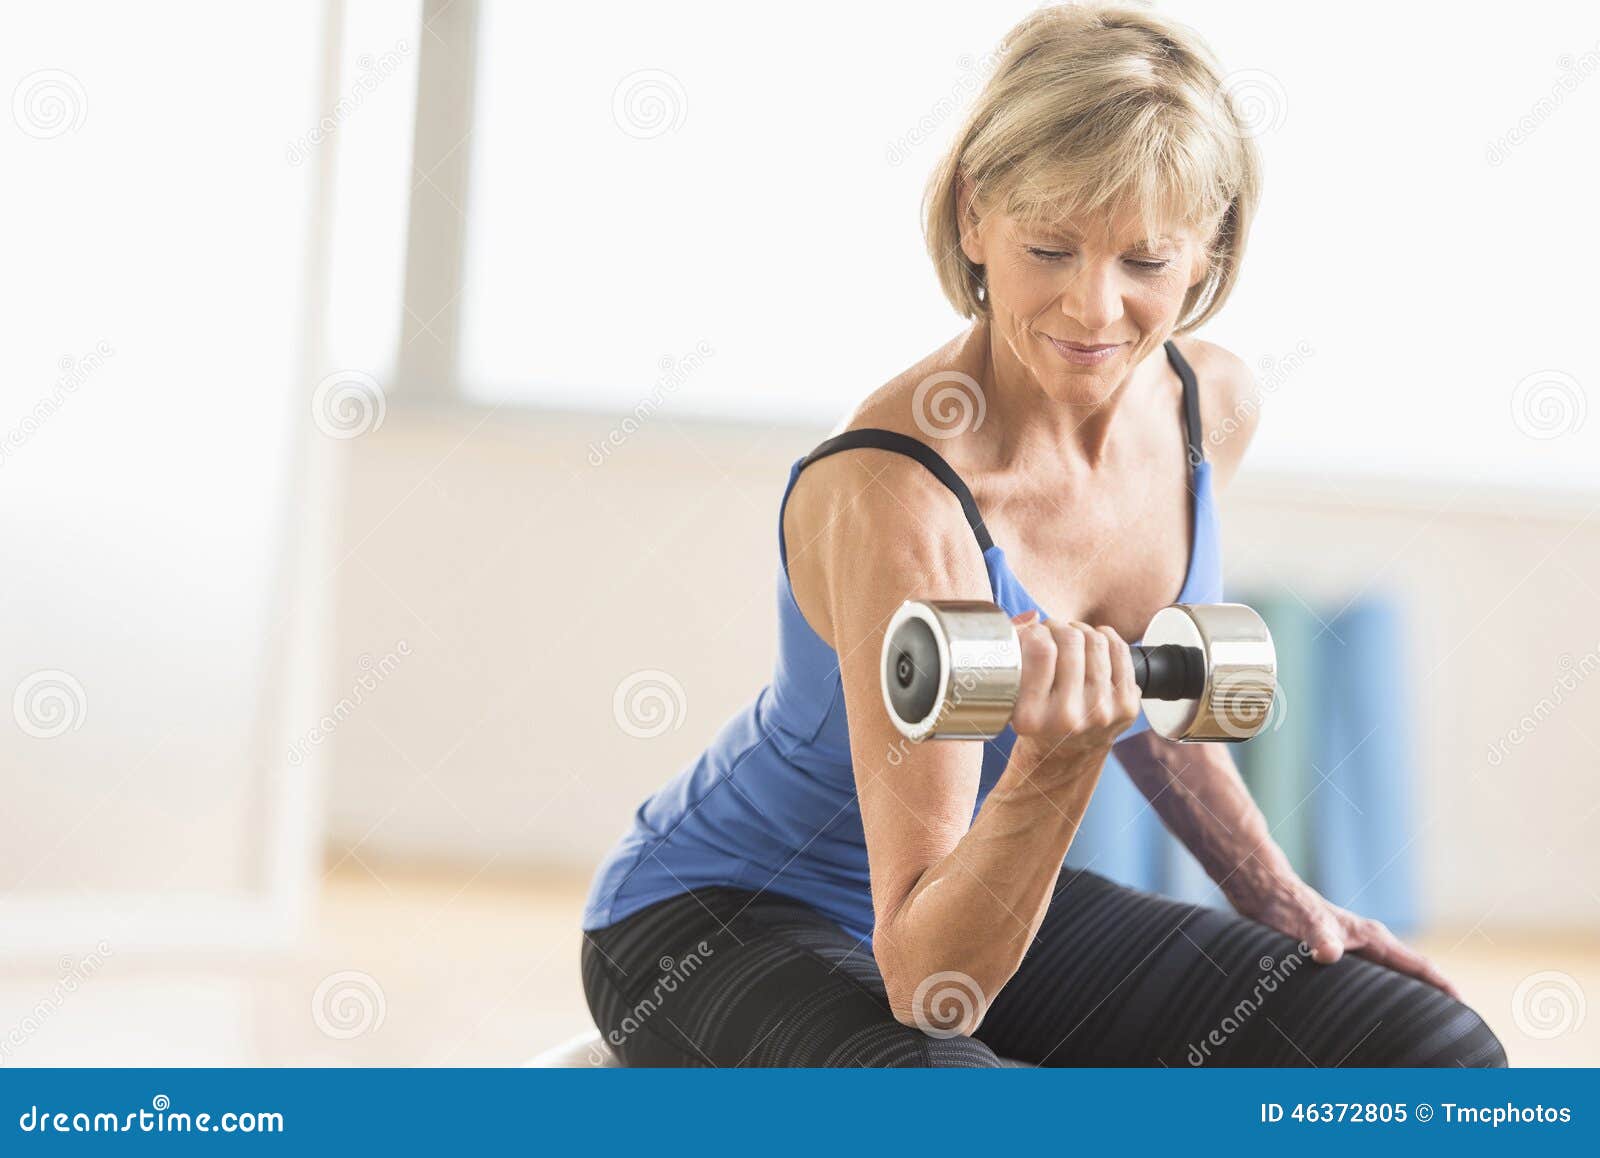 mature woman lifting dumbbell at home